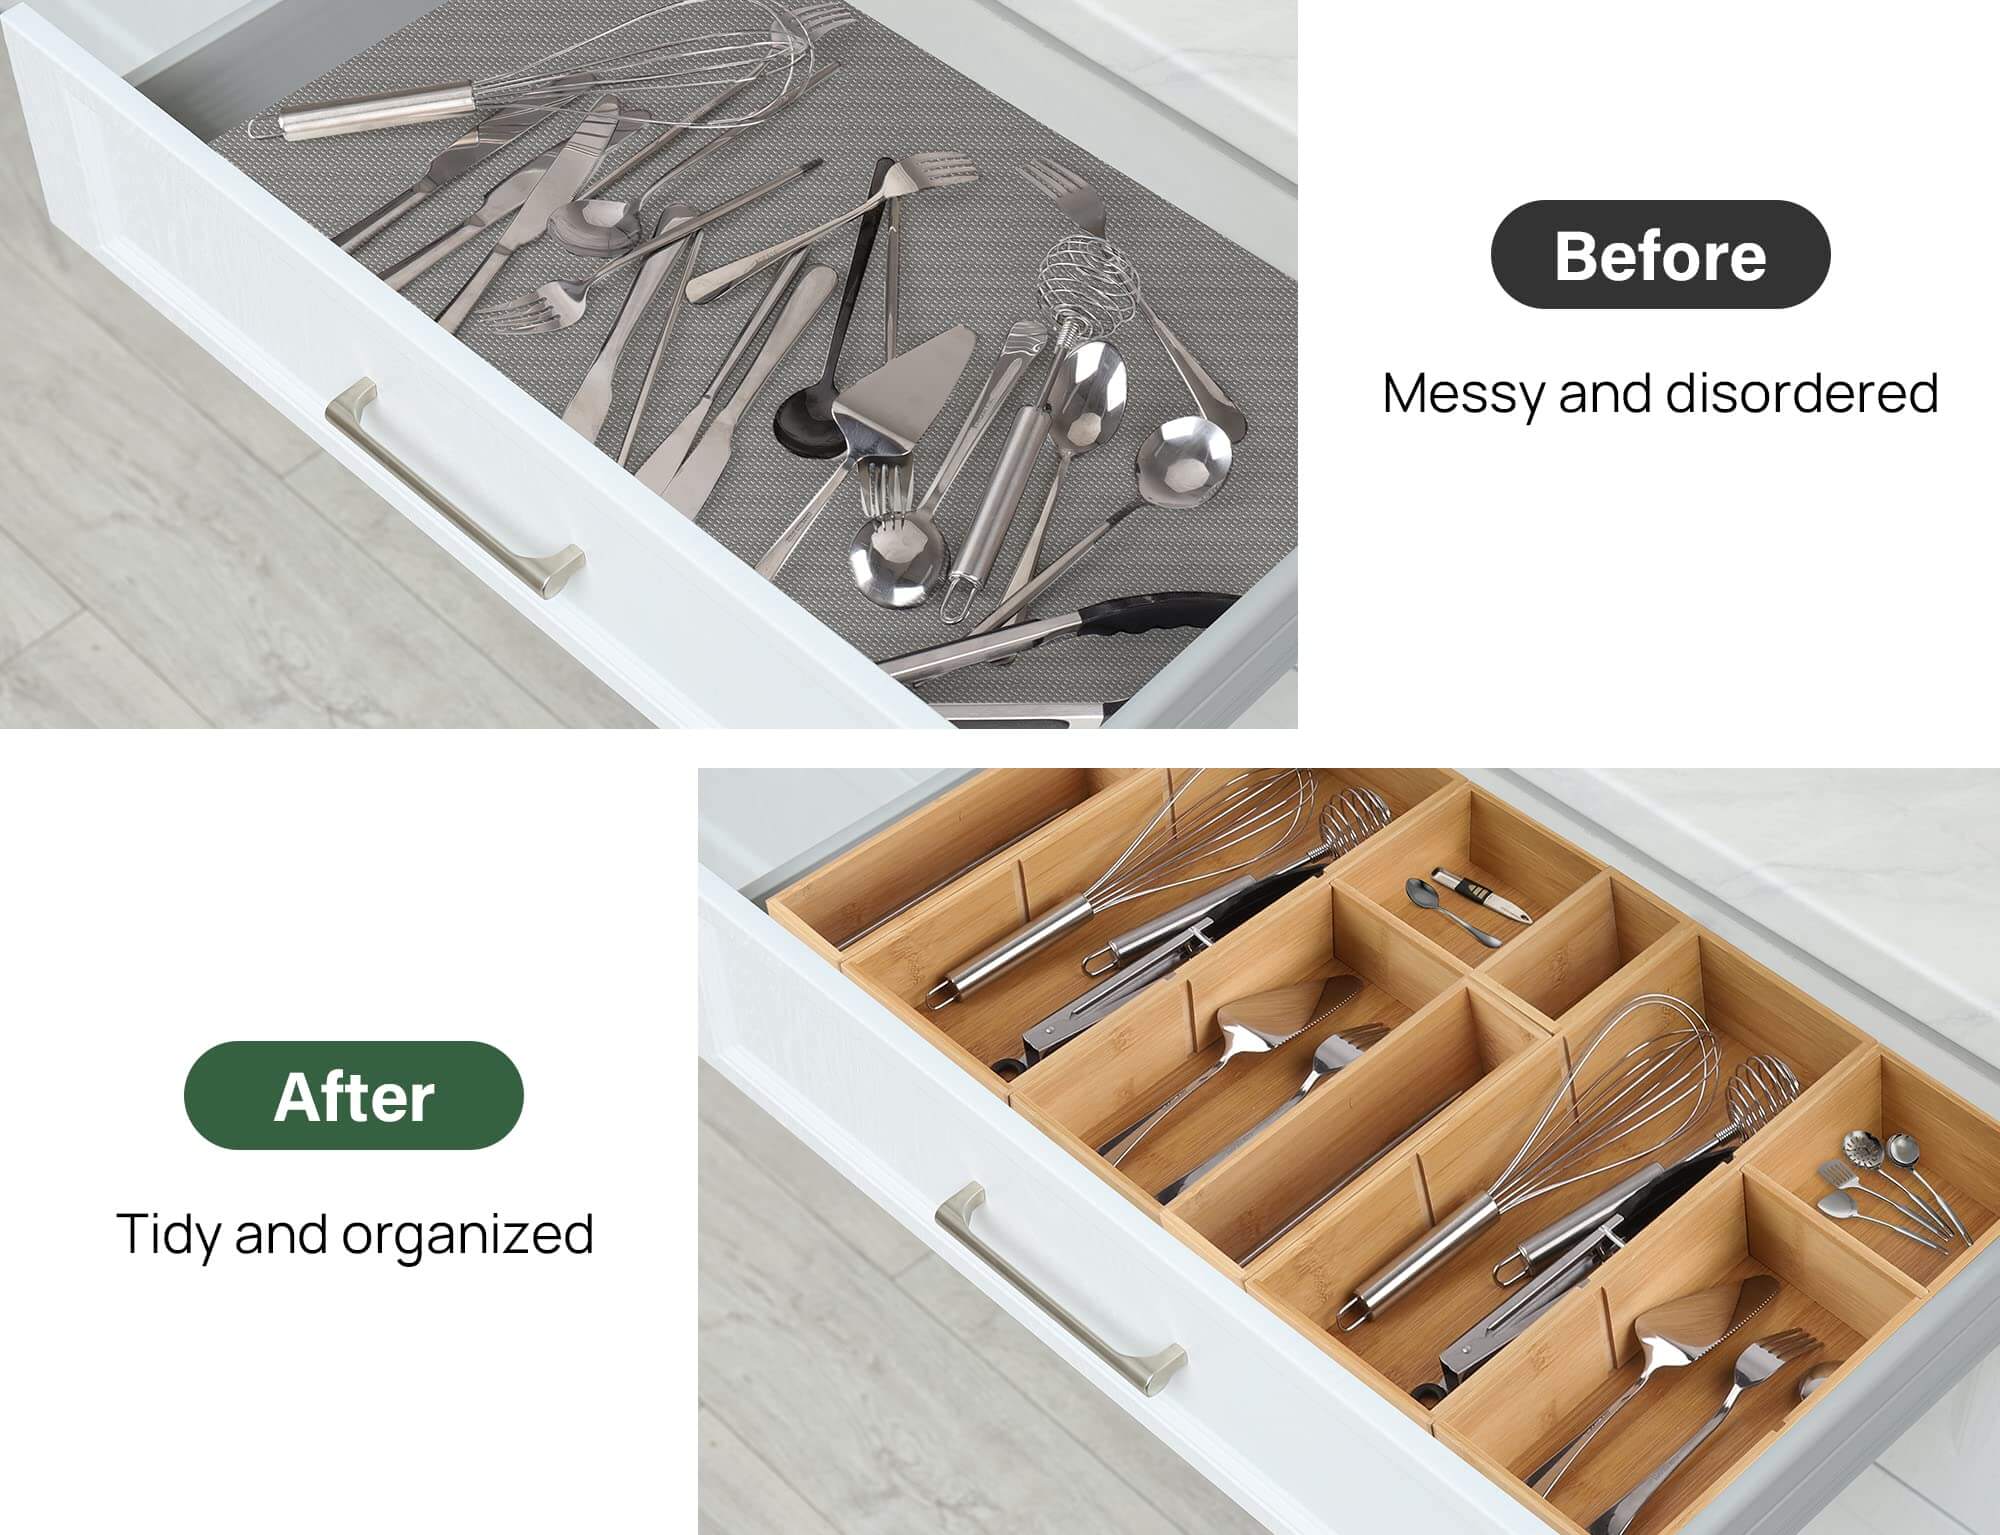 Kootek 6 Pcs Bamboo Drawer Organizer Utensil Tray Kitchen Storage Box 3-Size Versatile Dividers Cutlery Holders Bins Containers for Flatware Kitchen Utensils